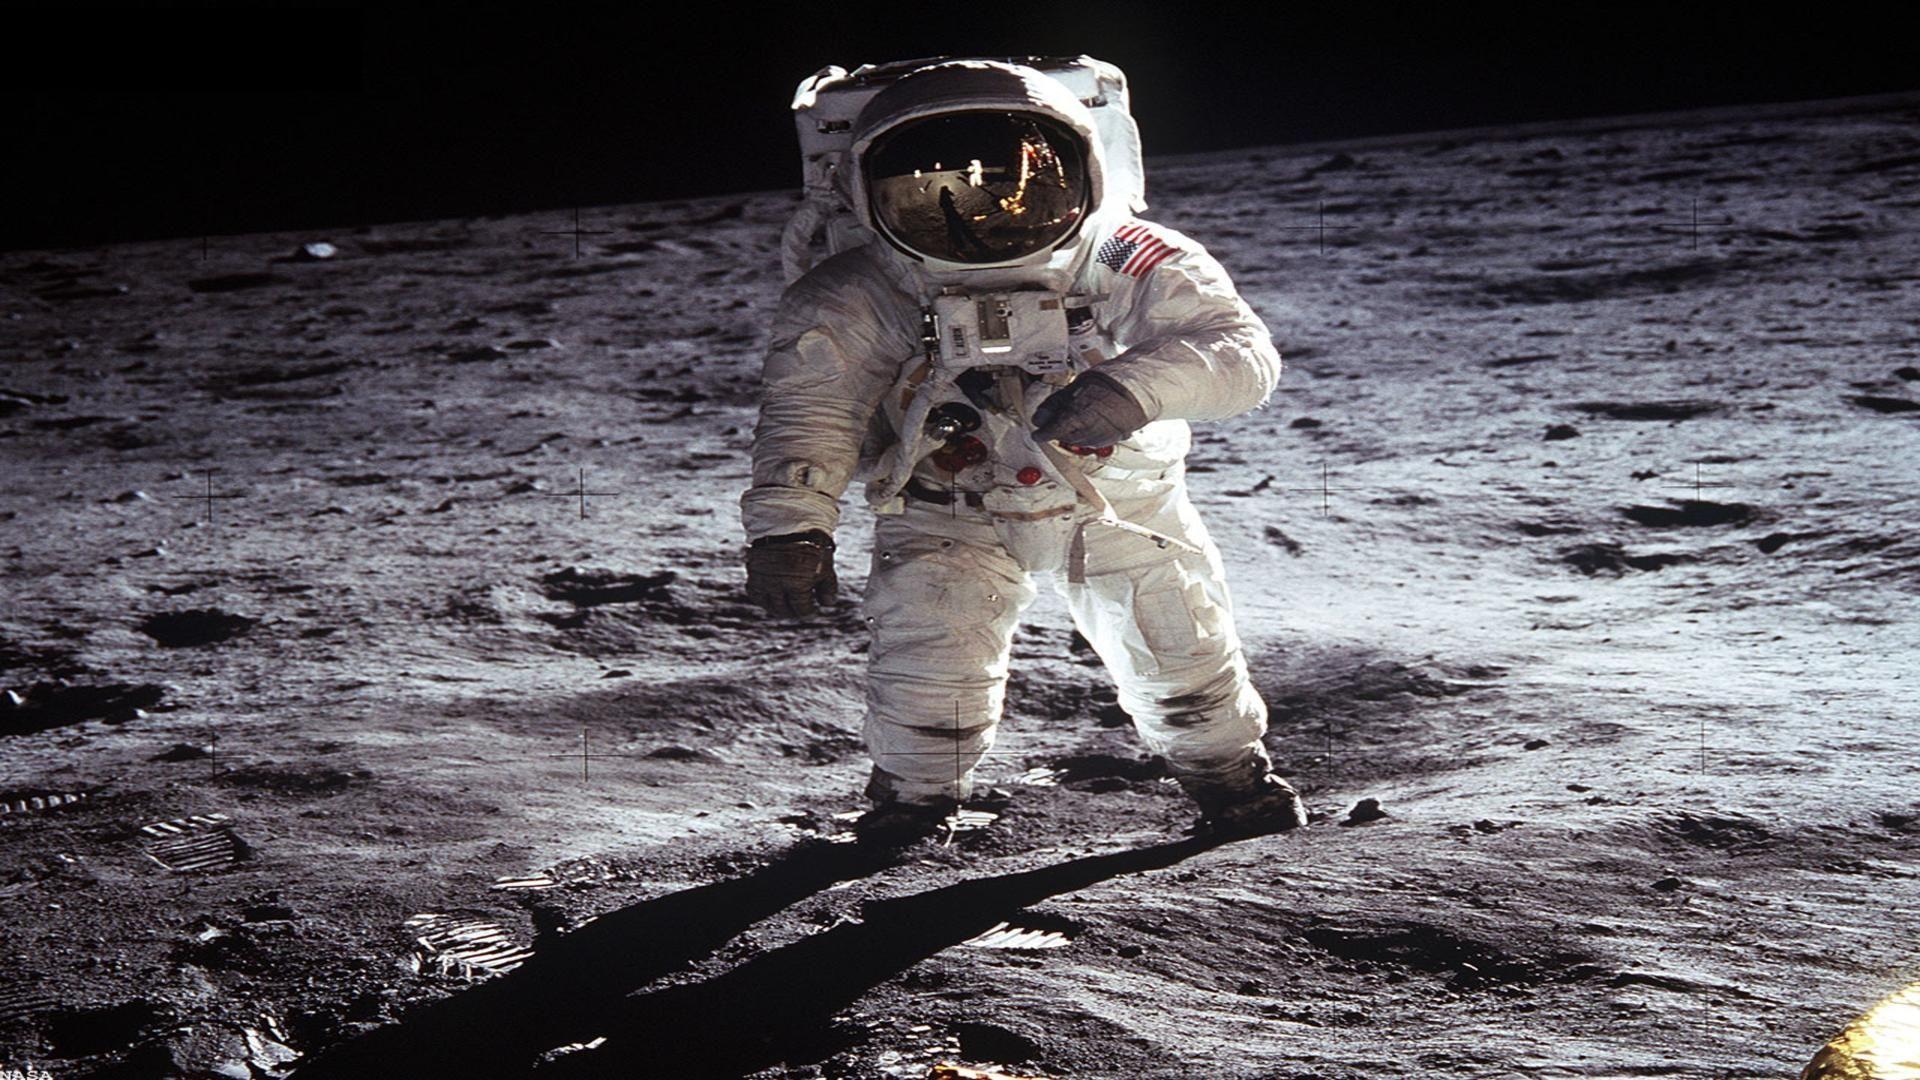 Apollo 11 mission space free desktop background wallpaper image